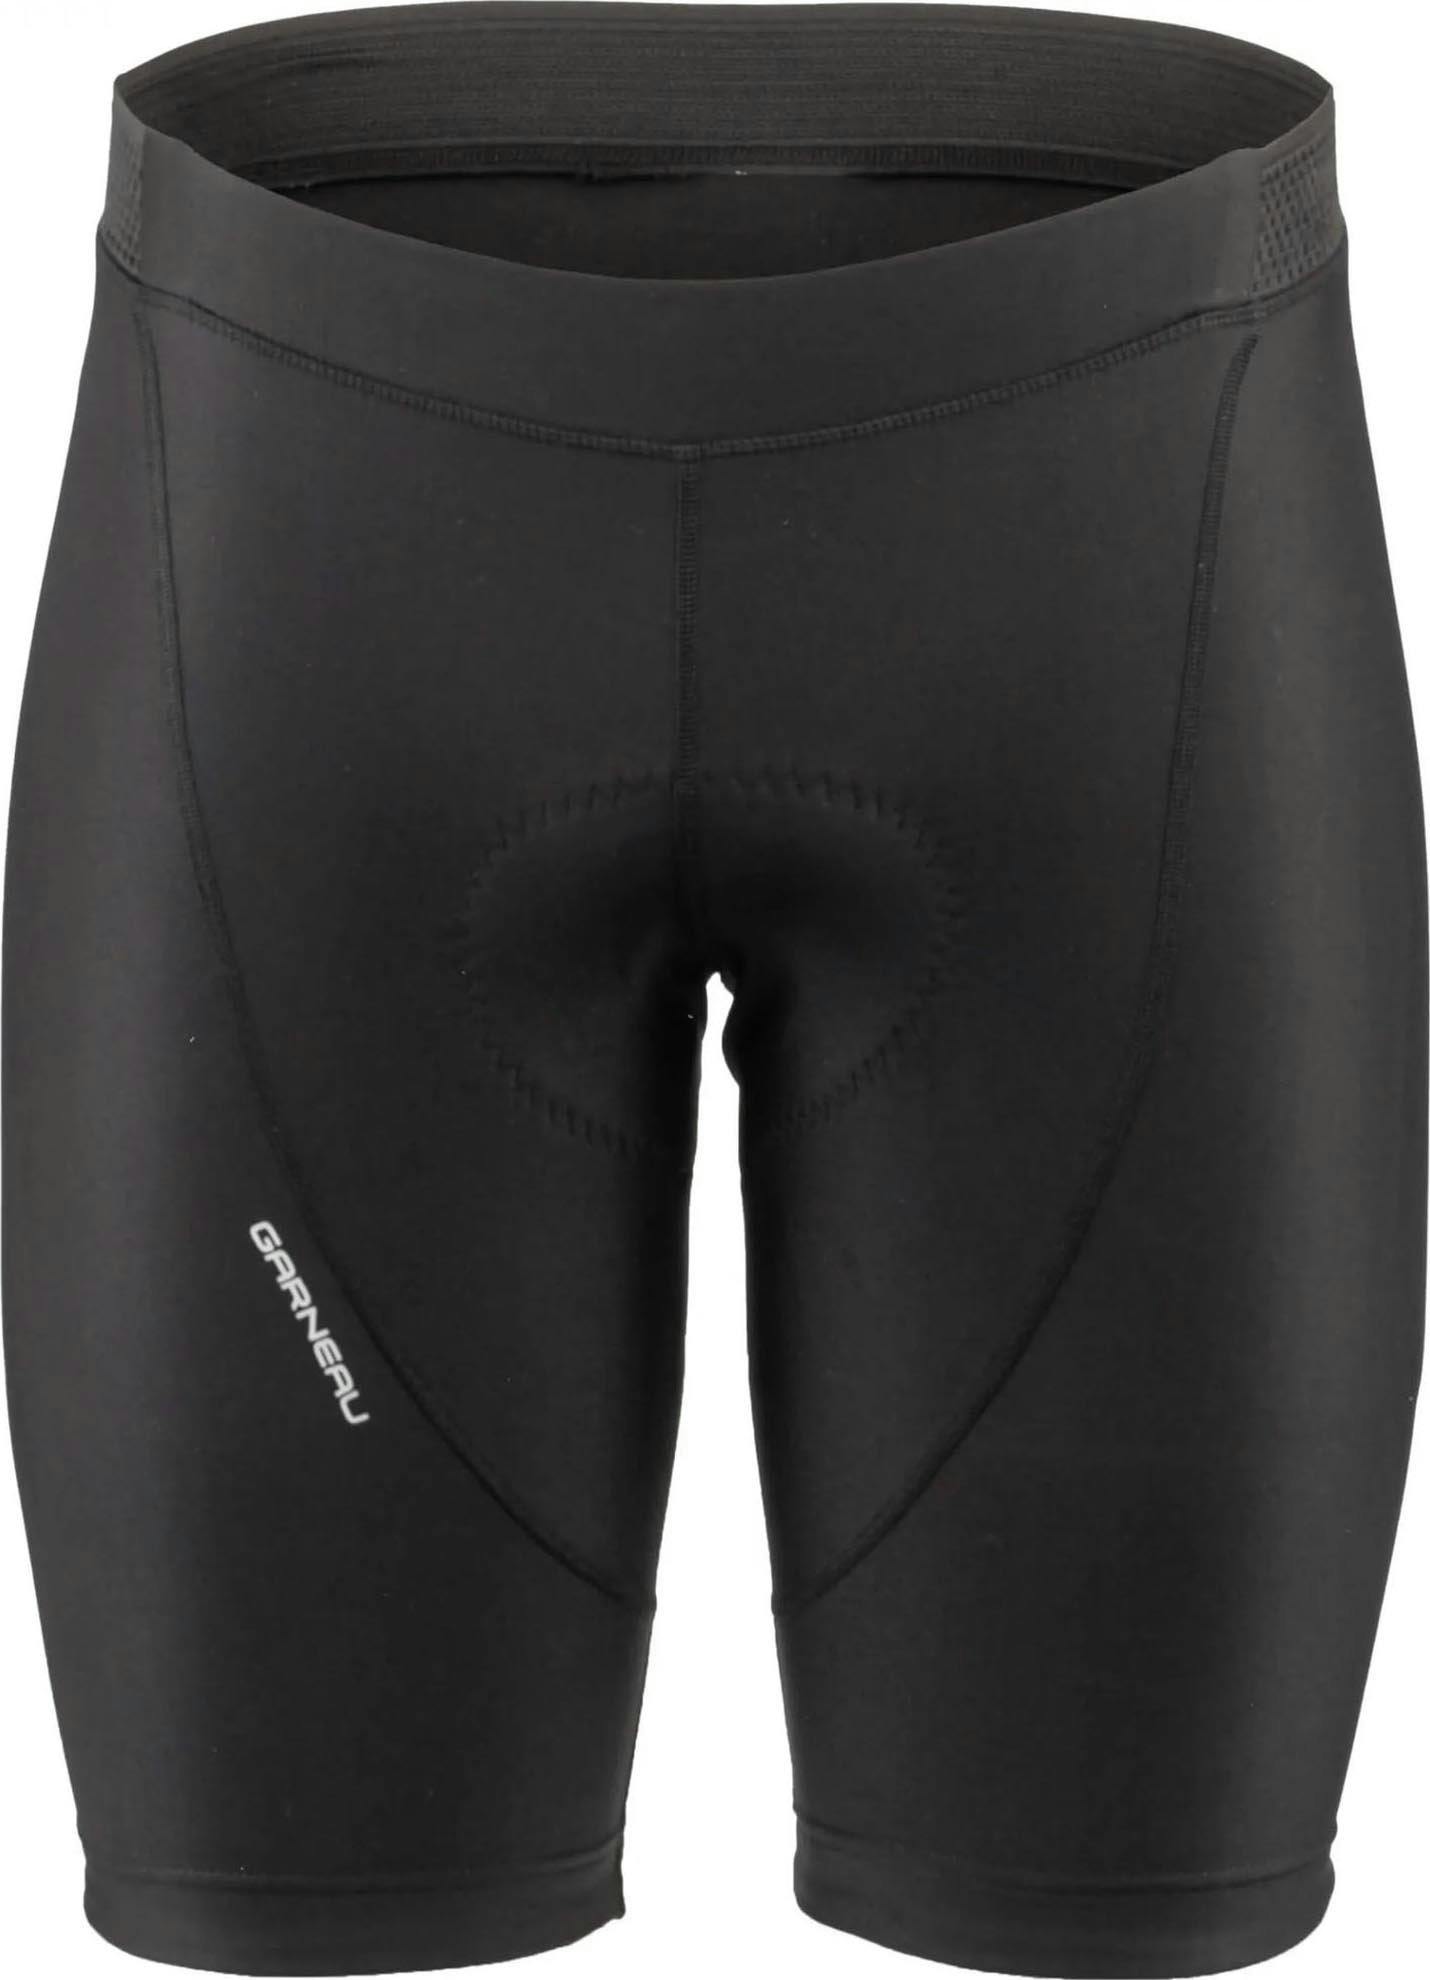 Product image for Fit Sensor 3 Shorts - Men's